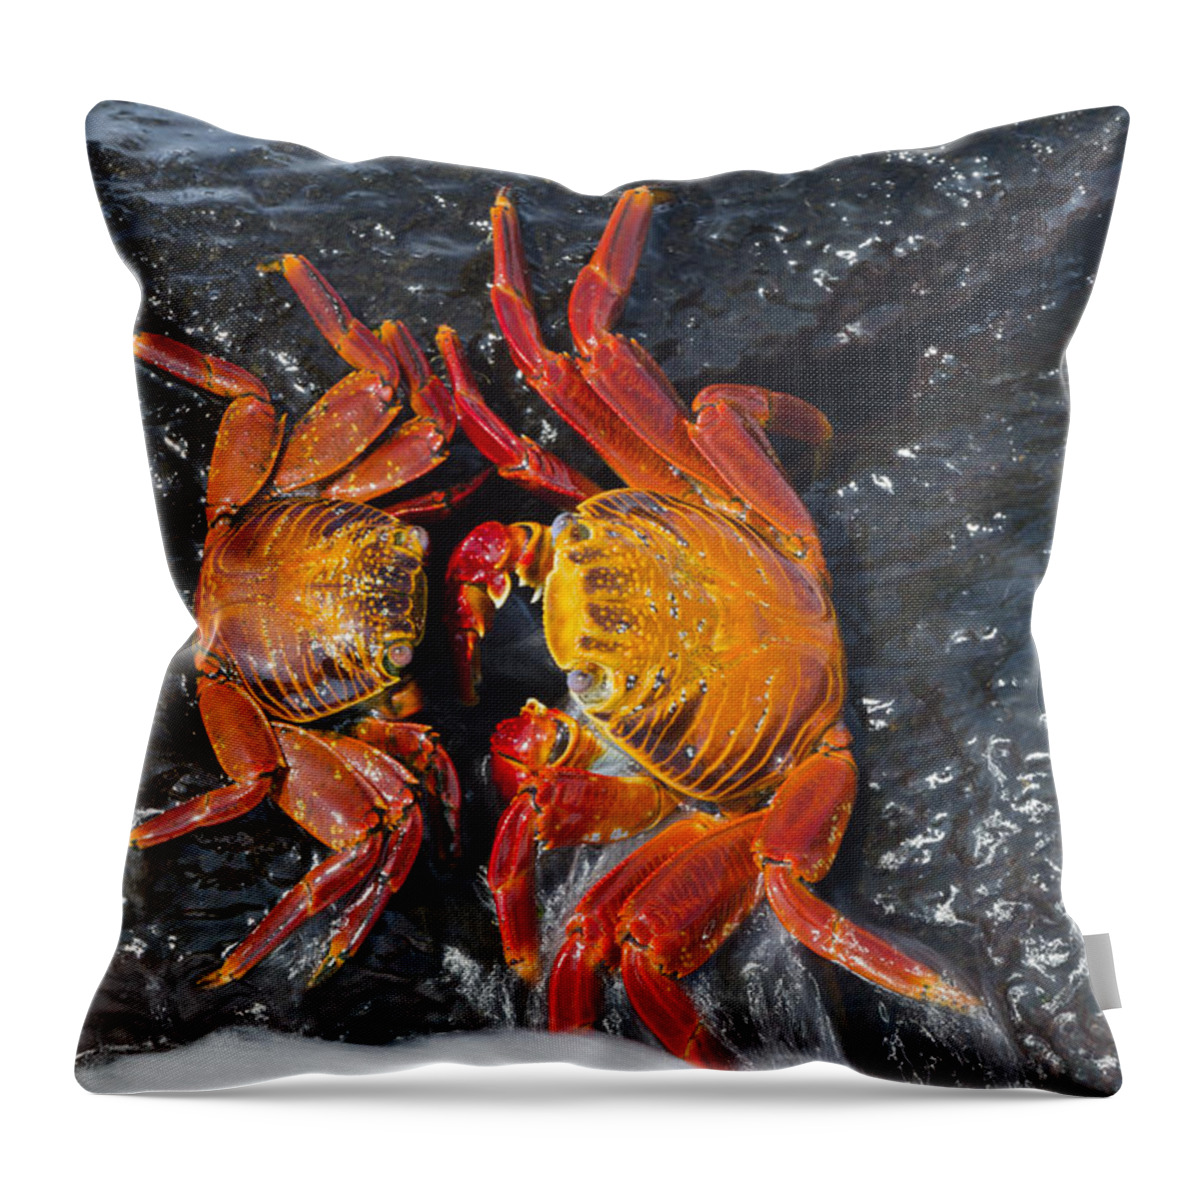 536812 Throw Pillow featuring the photograph Sally Lightfoot Crabs Galapagos Islands by Tui De Roy